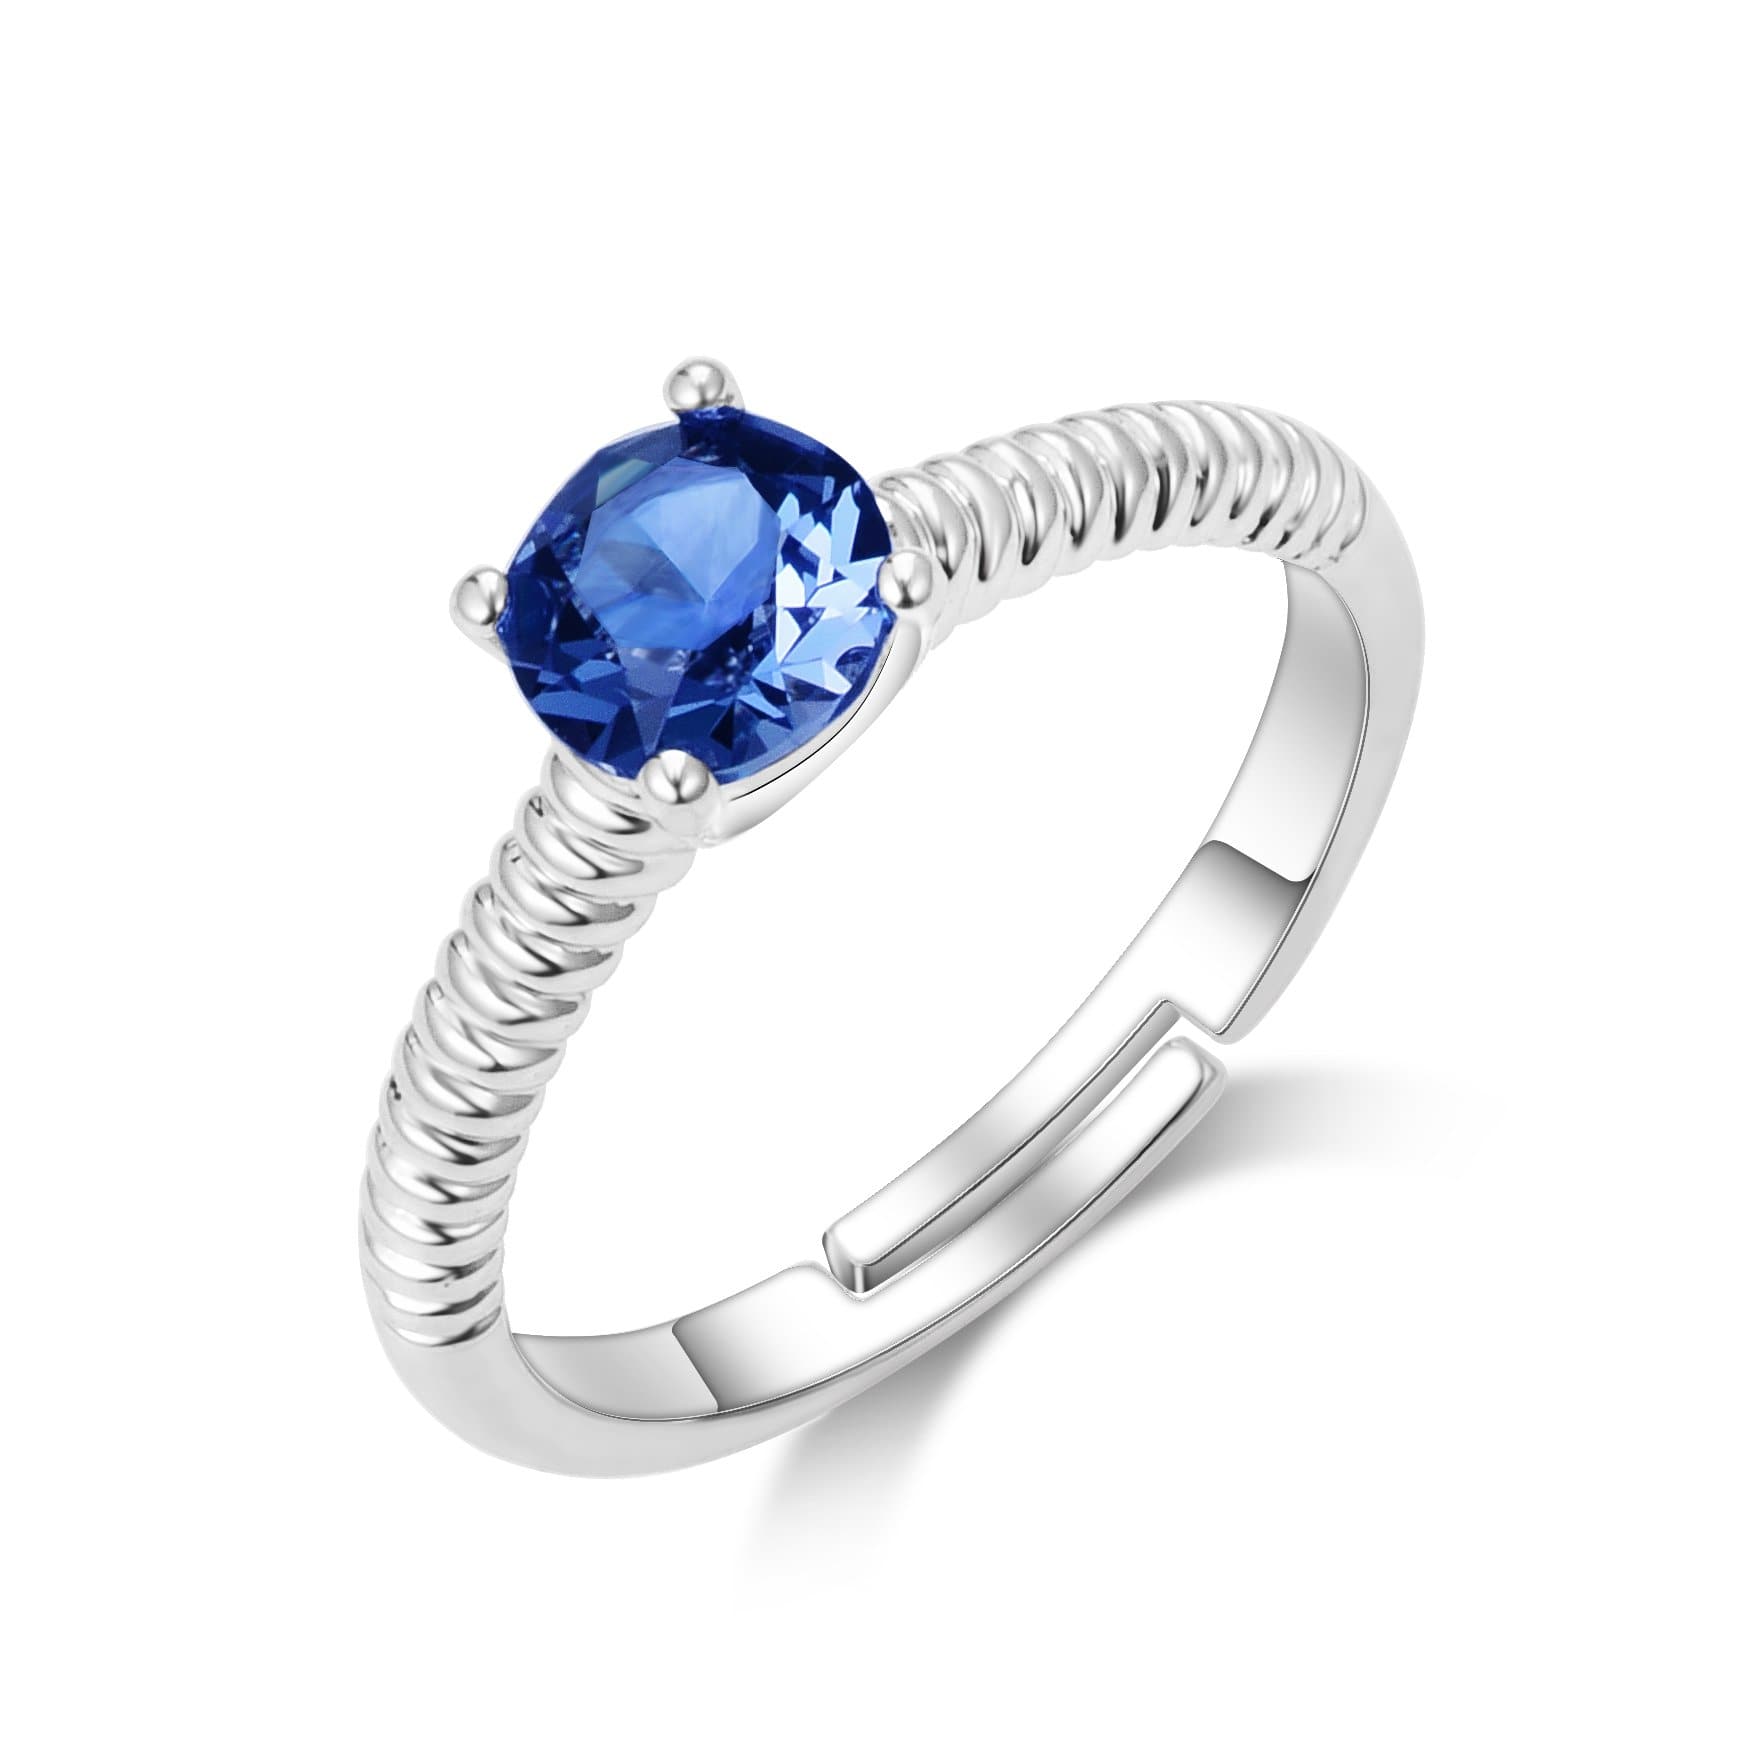 Dark Blue Adjustable Crystal Ring Created with Zircondia® Crystals by Philip Jones Jewellery